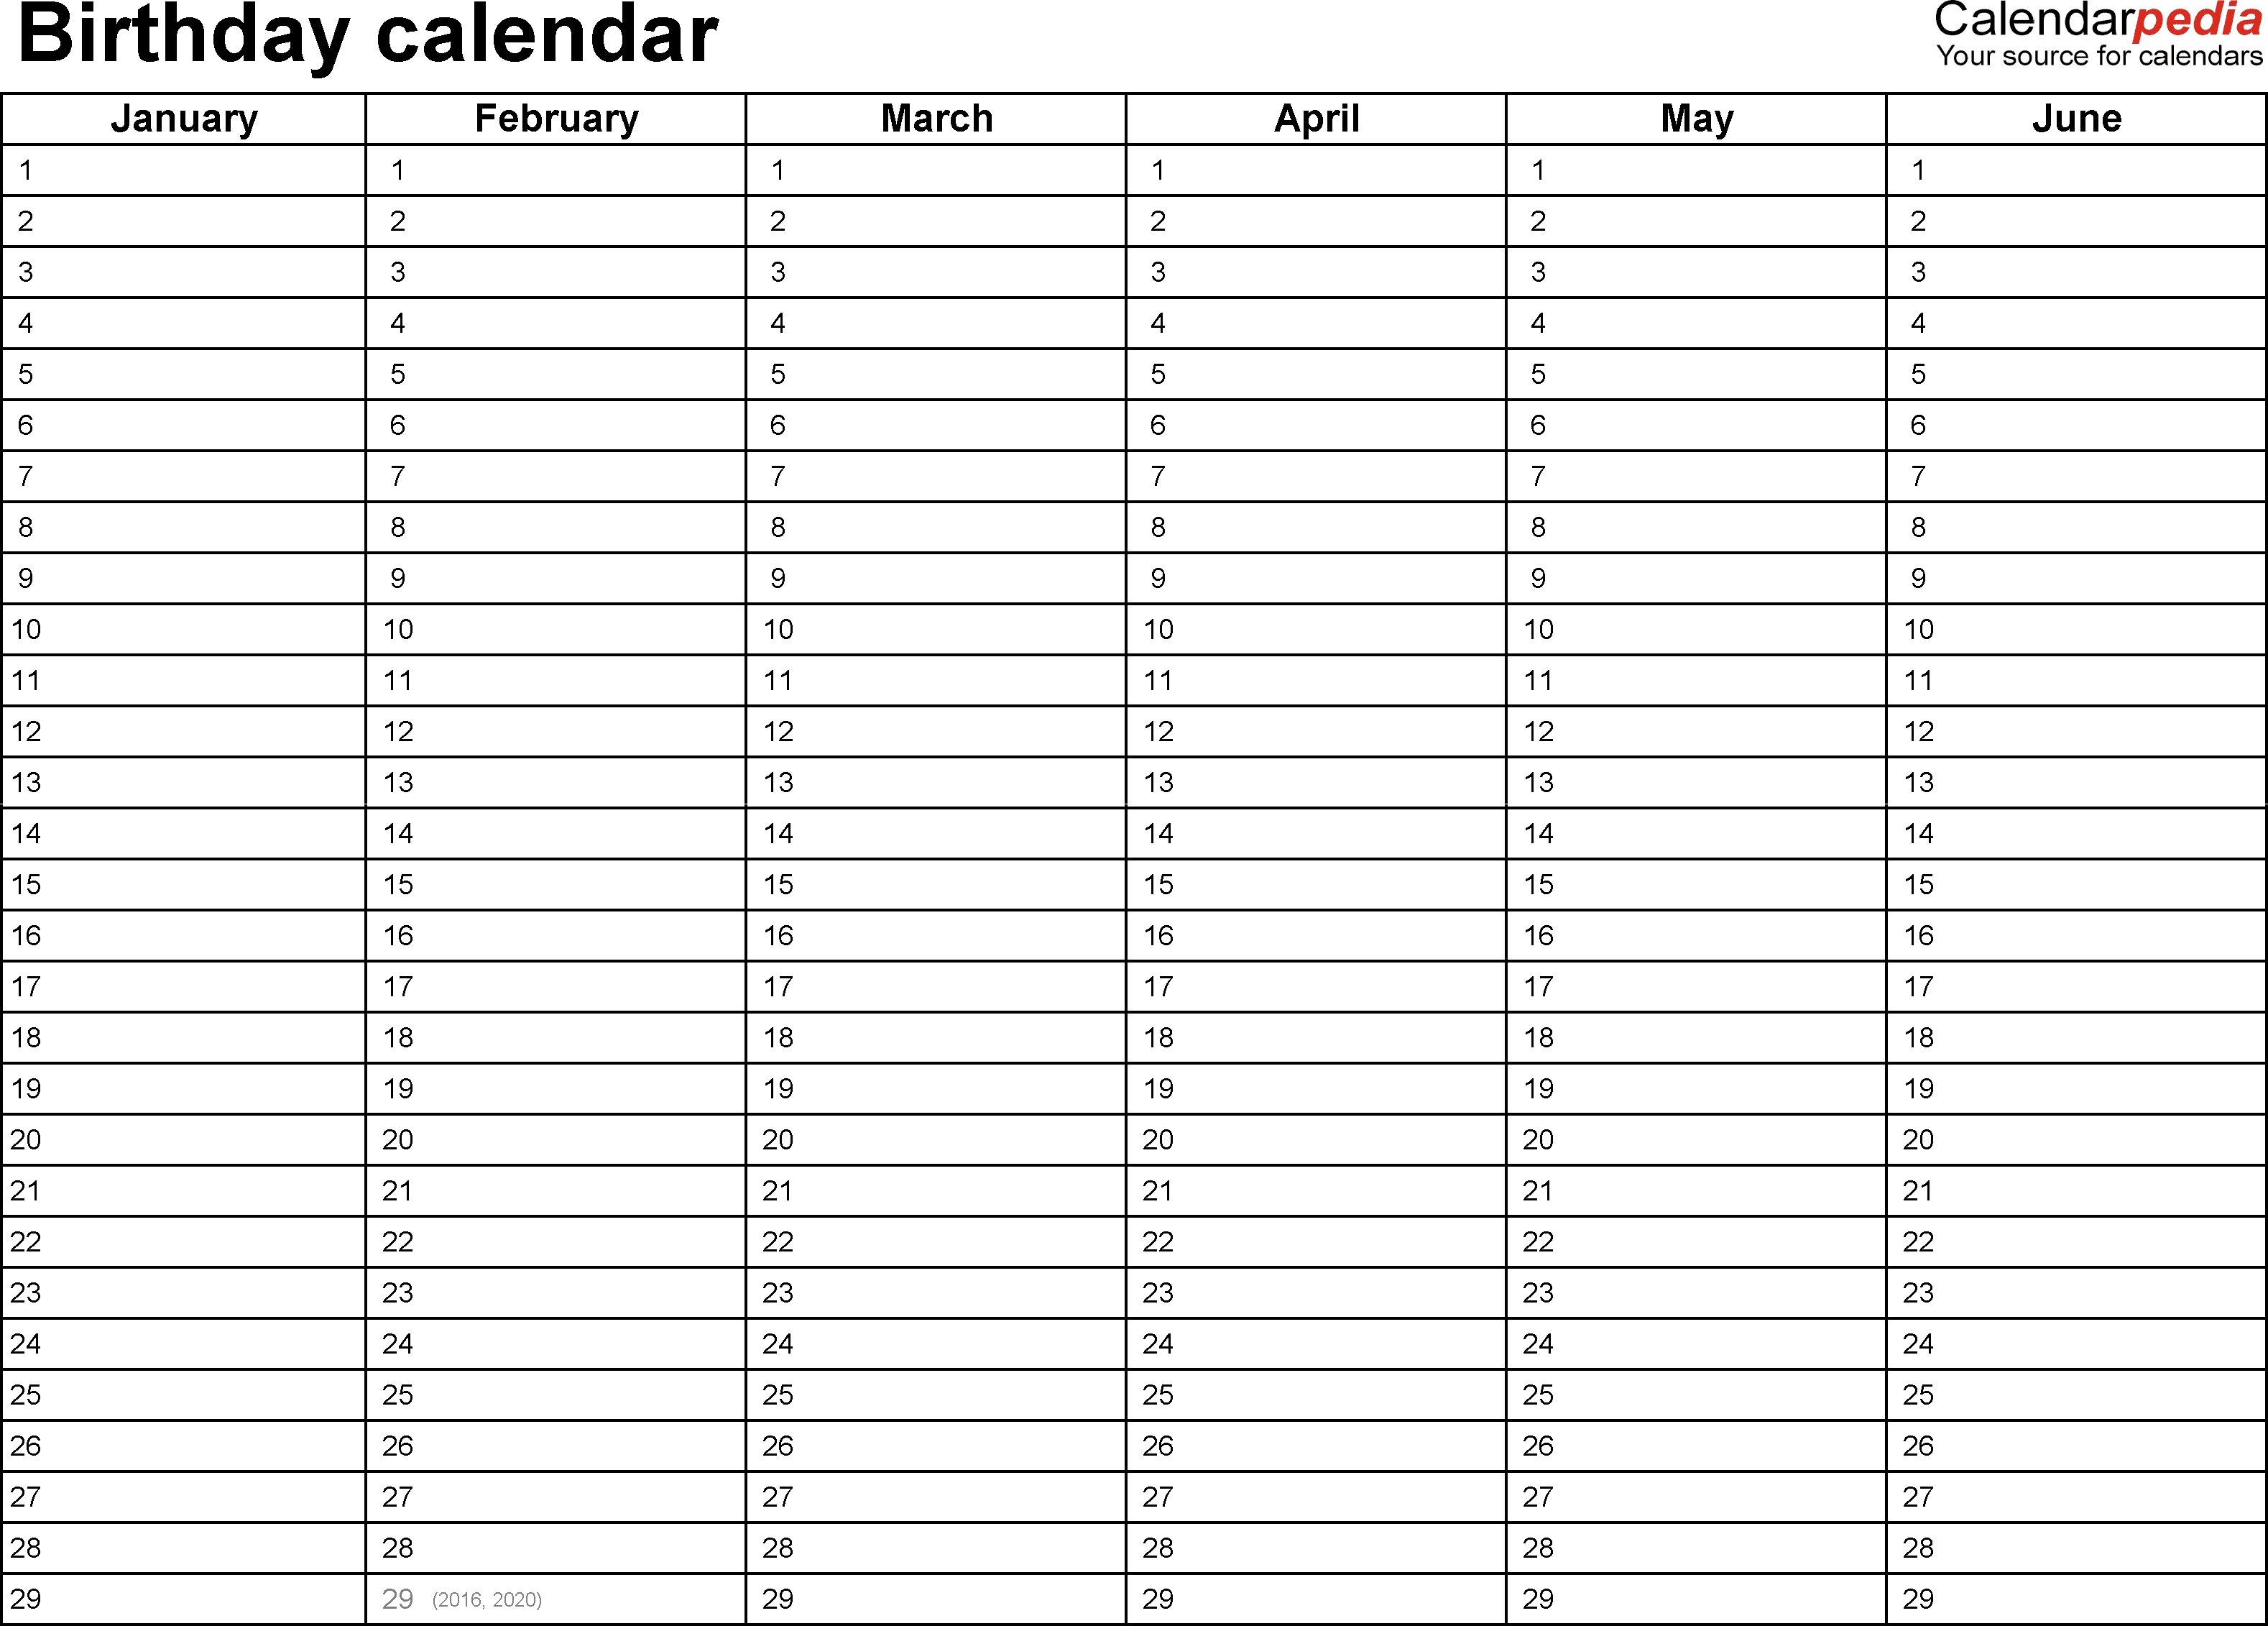 Birthday Calendars - 7 Free Printable Word Templates within Free Printable Birthday Calendar Template